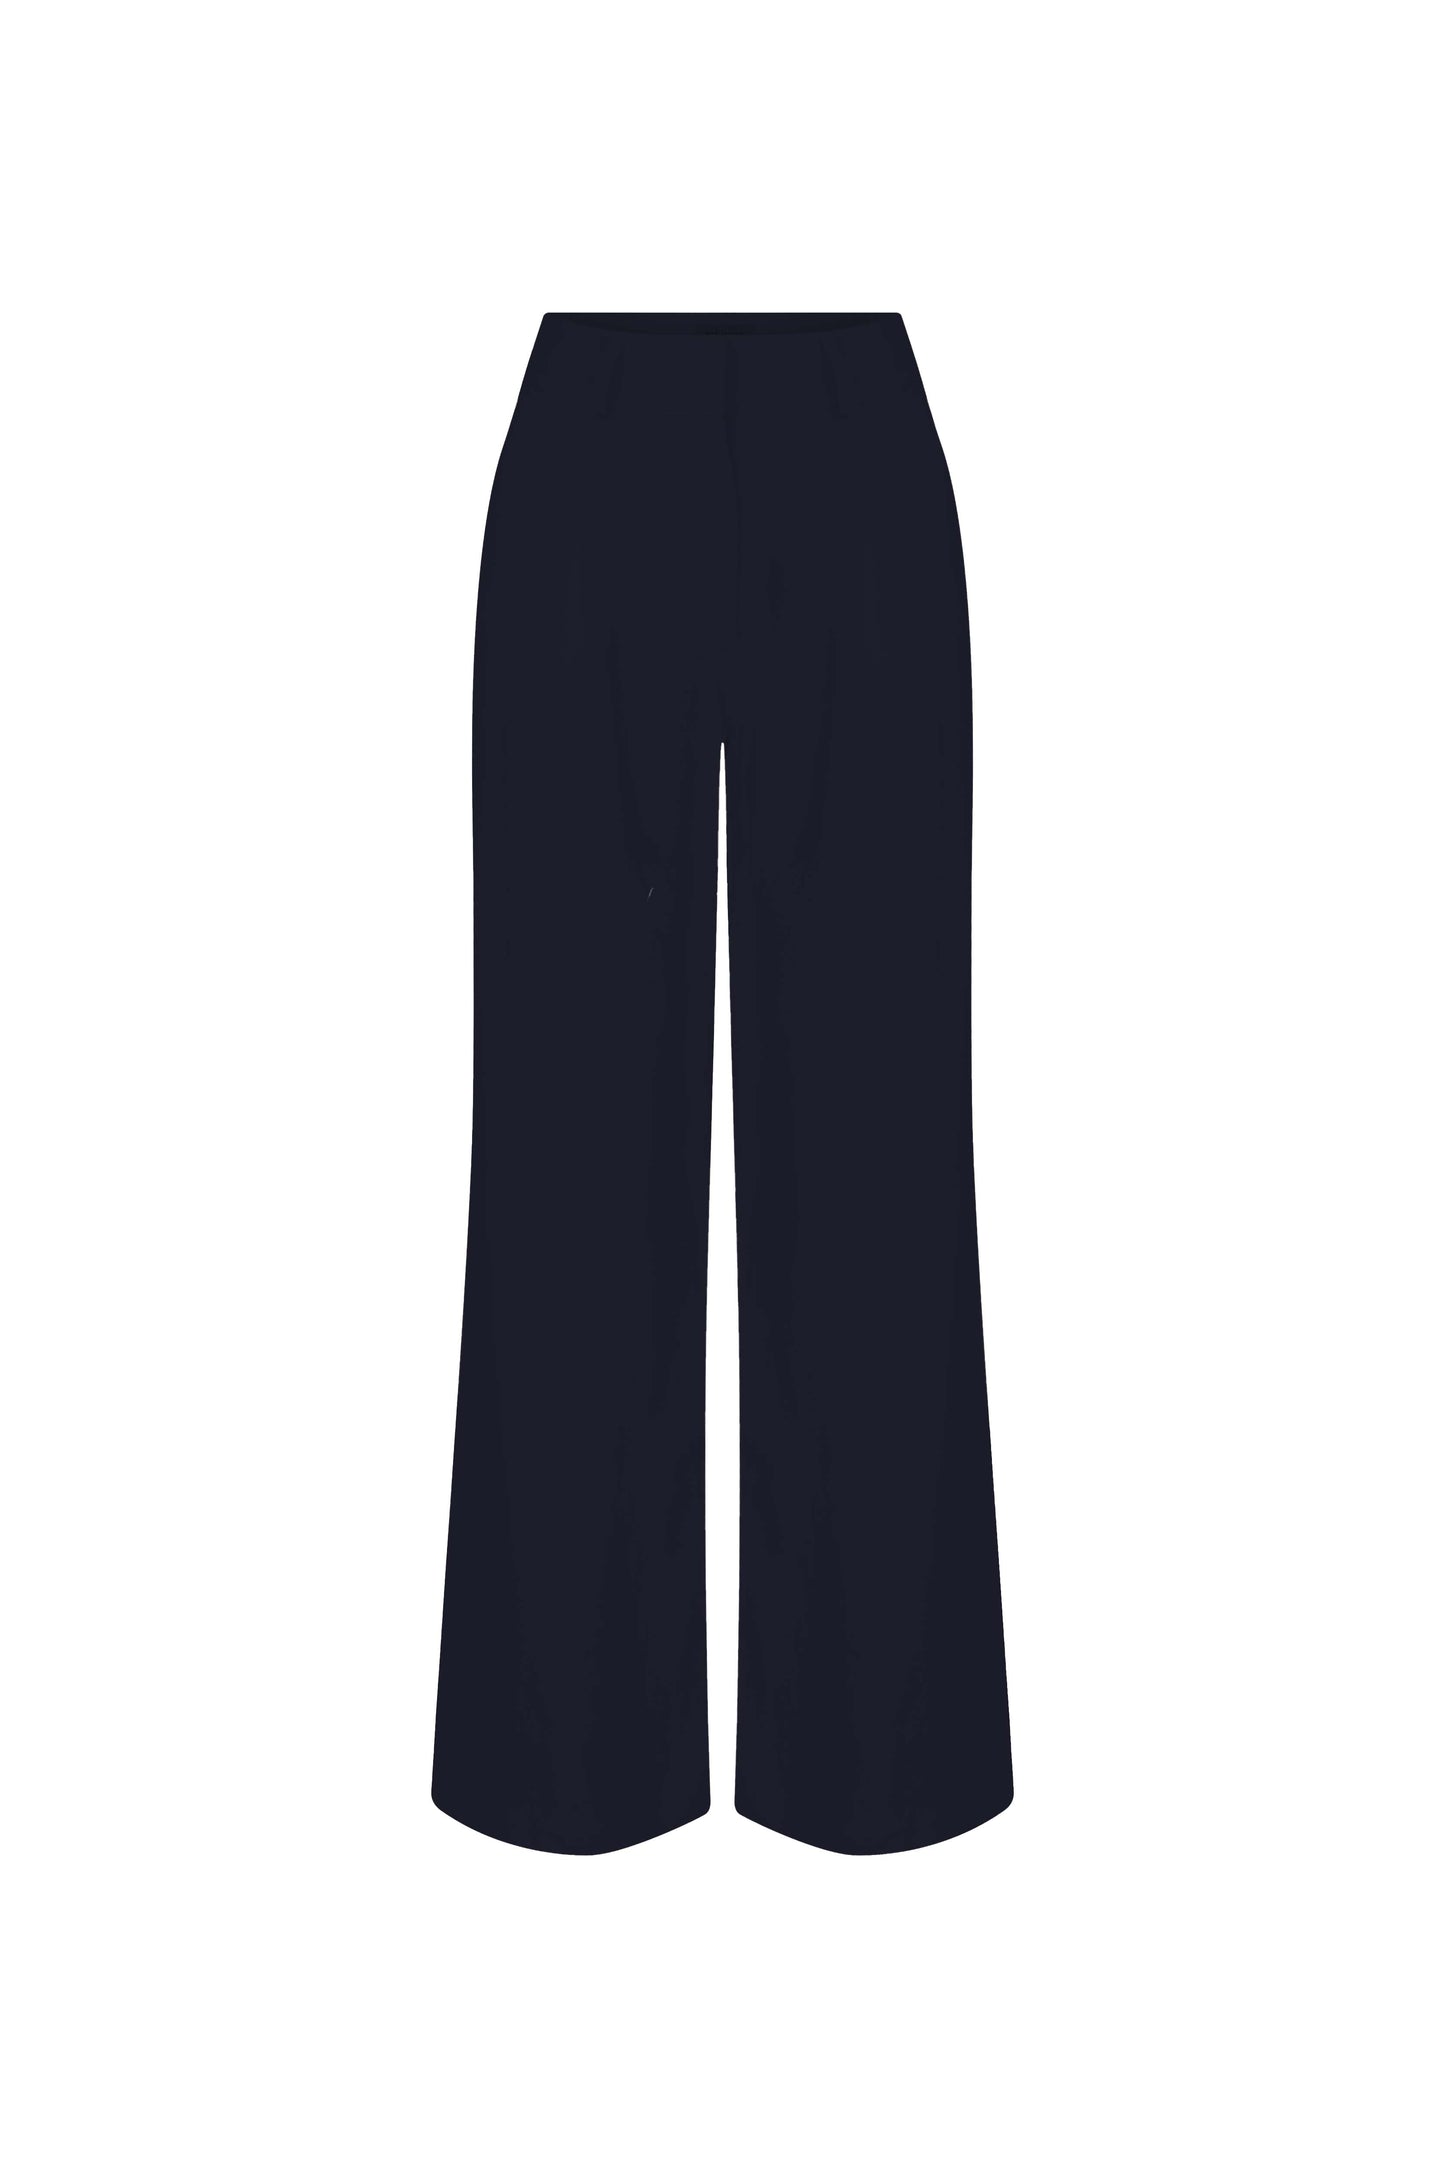 Tina Linen Trousers in Dark Navy